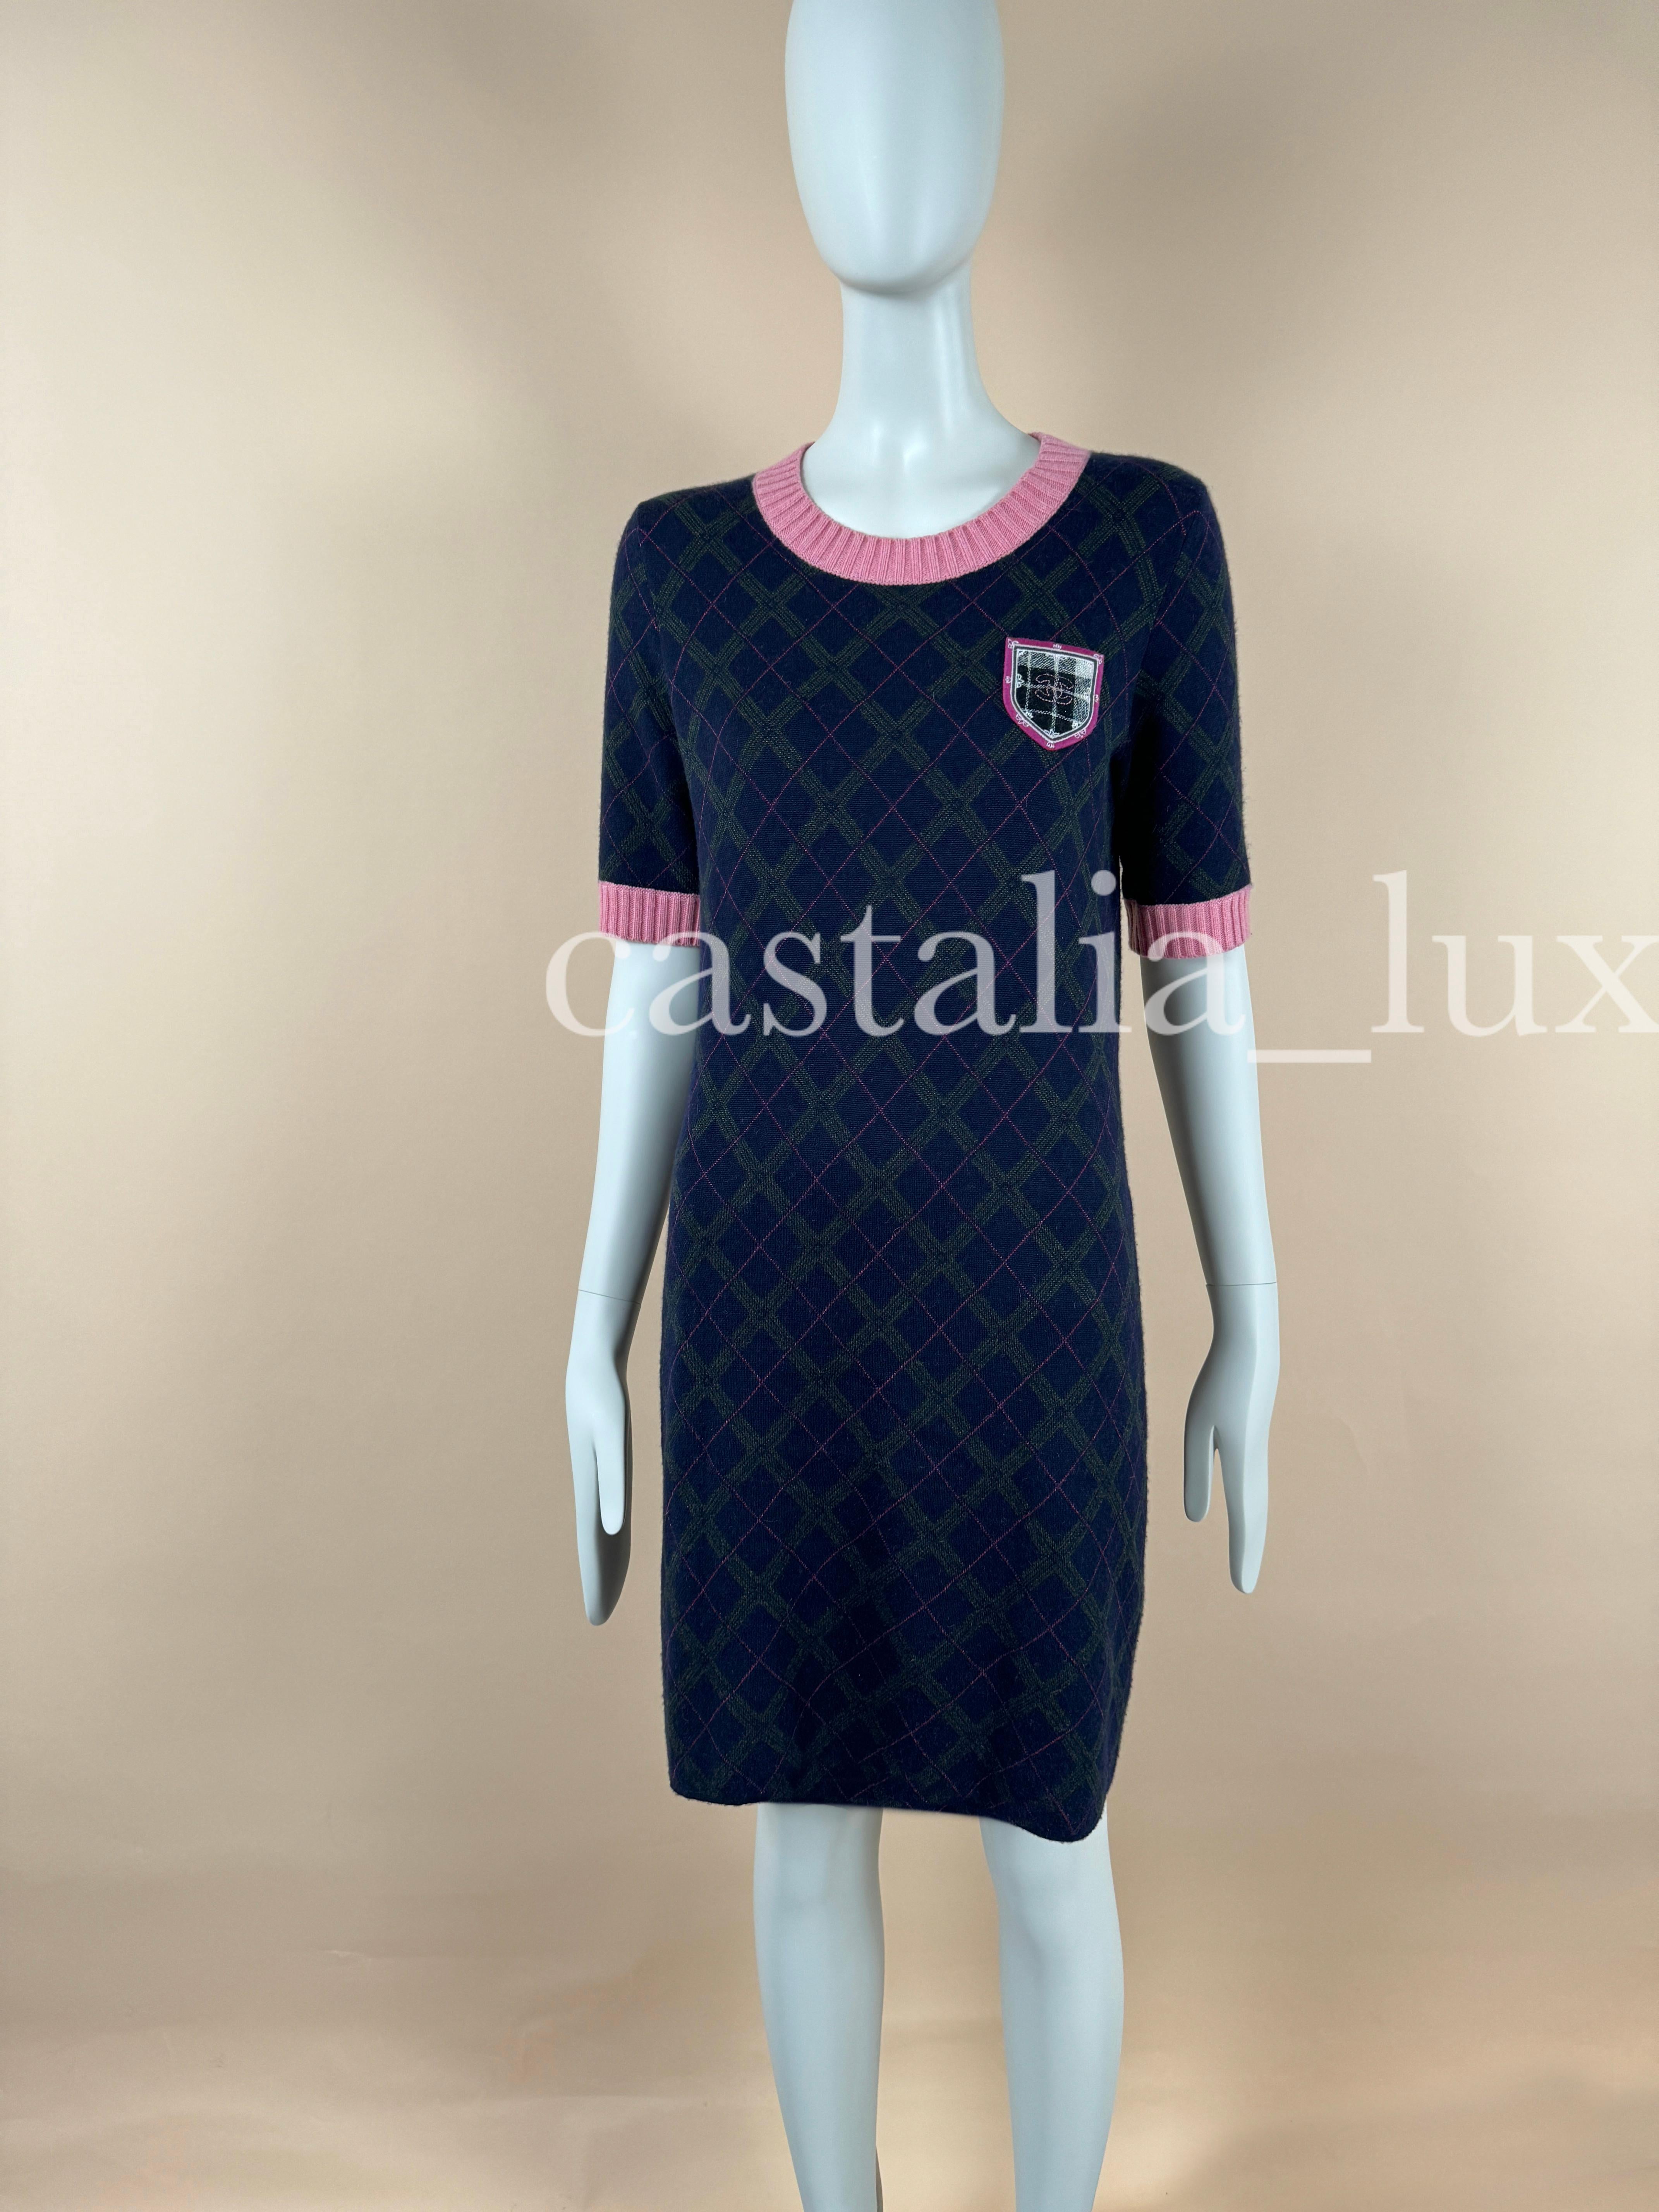 Chanel New  Paris / Edinburgh Argyle Cashmere Dress In New Condition For Sale In Dubai, AE